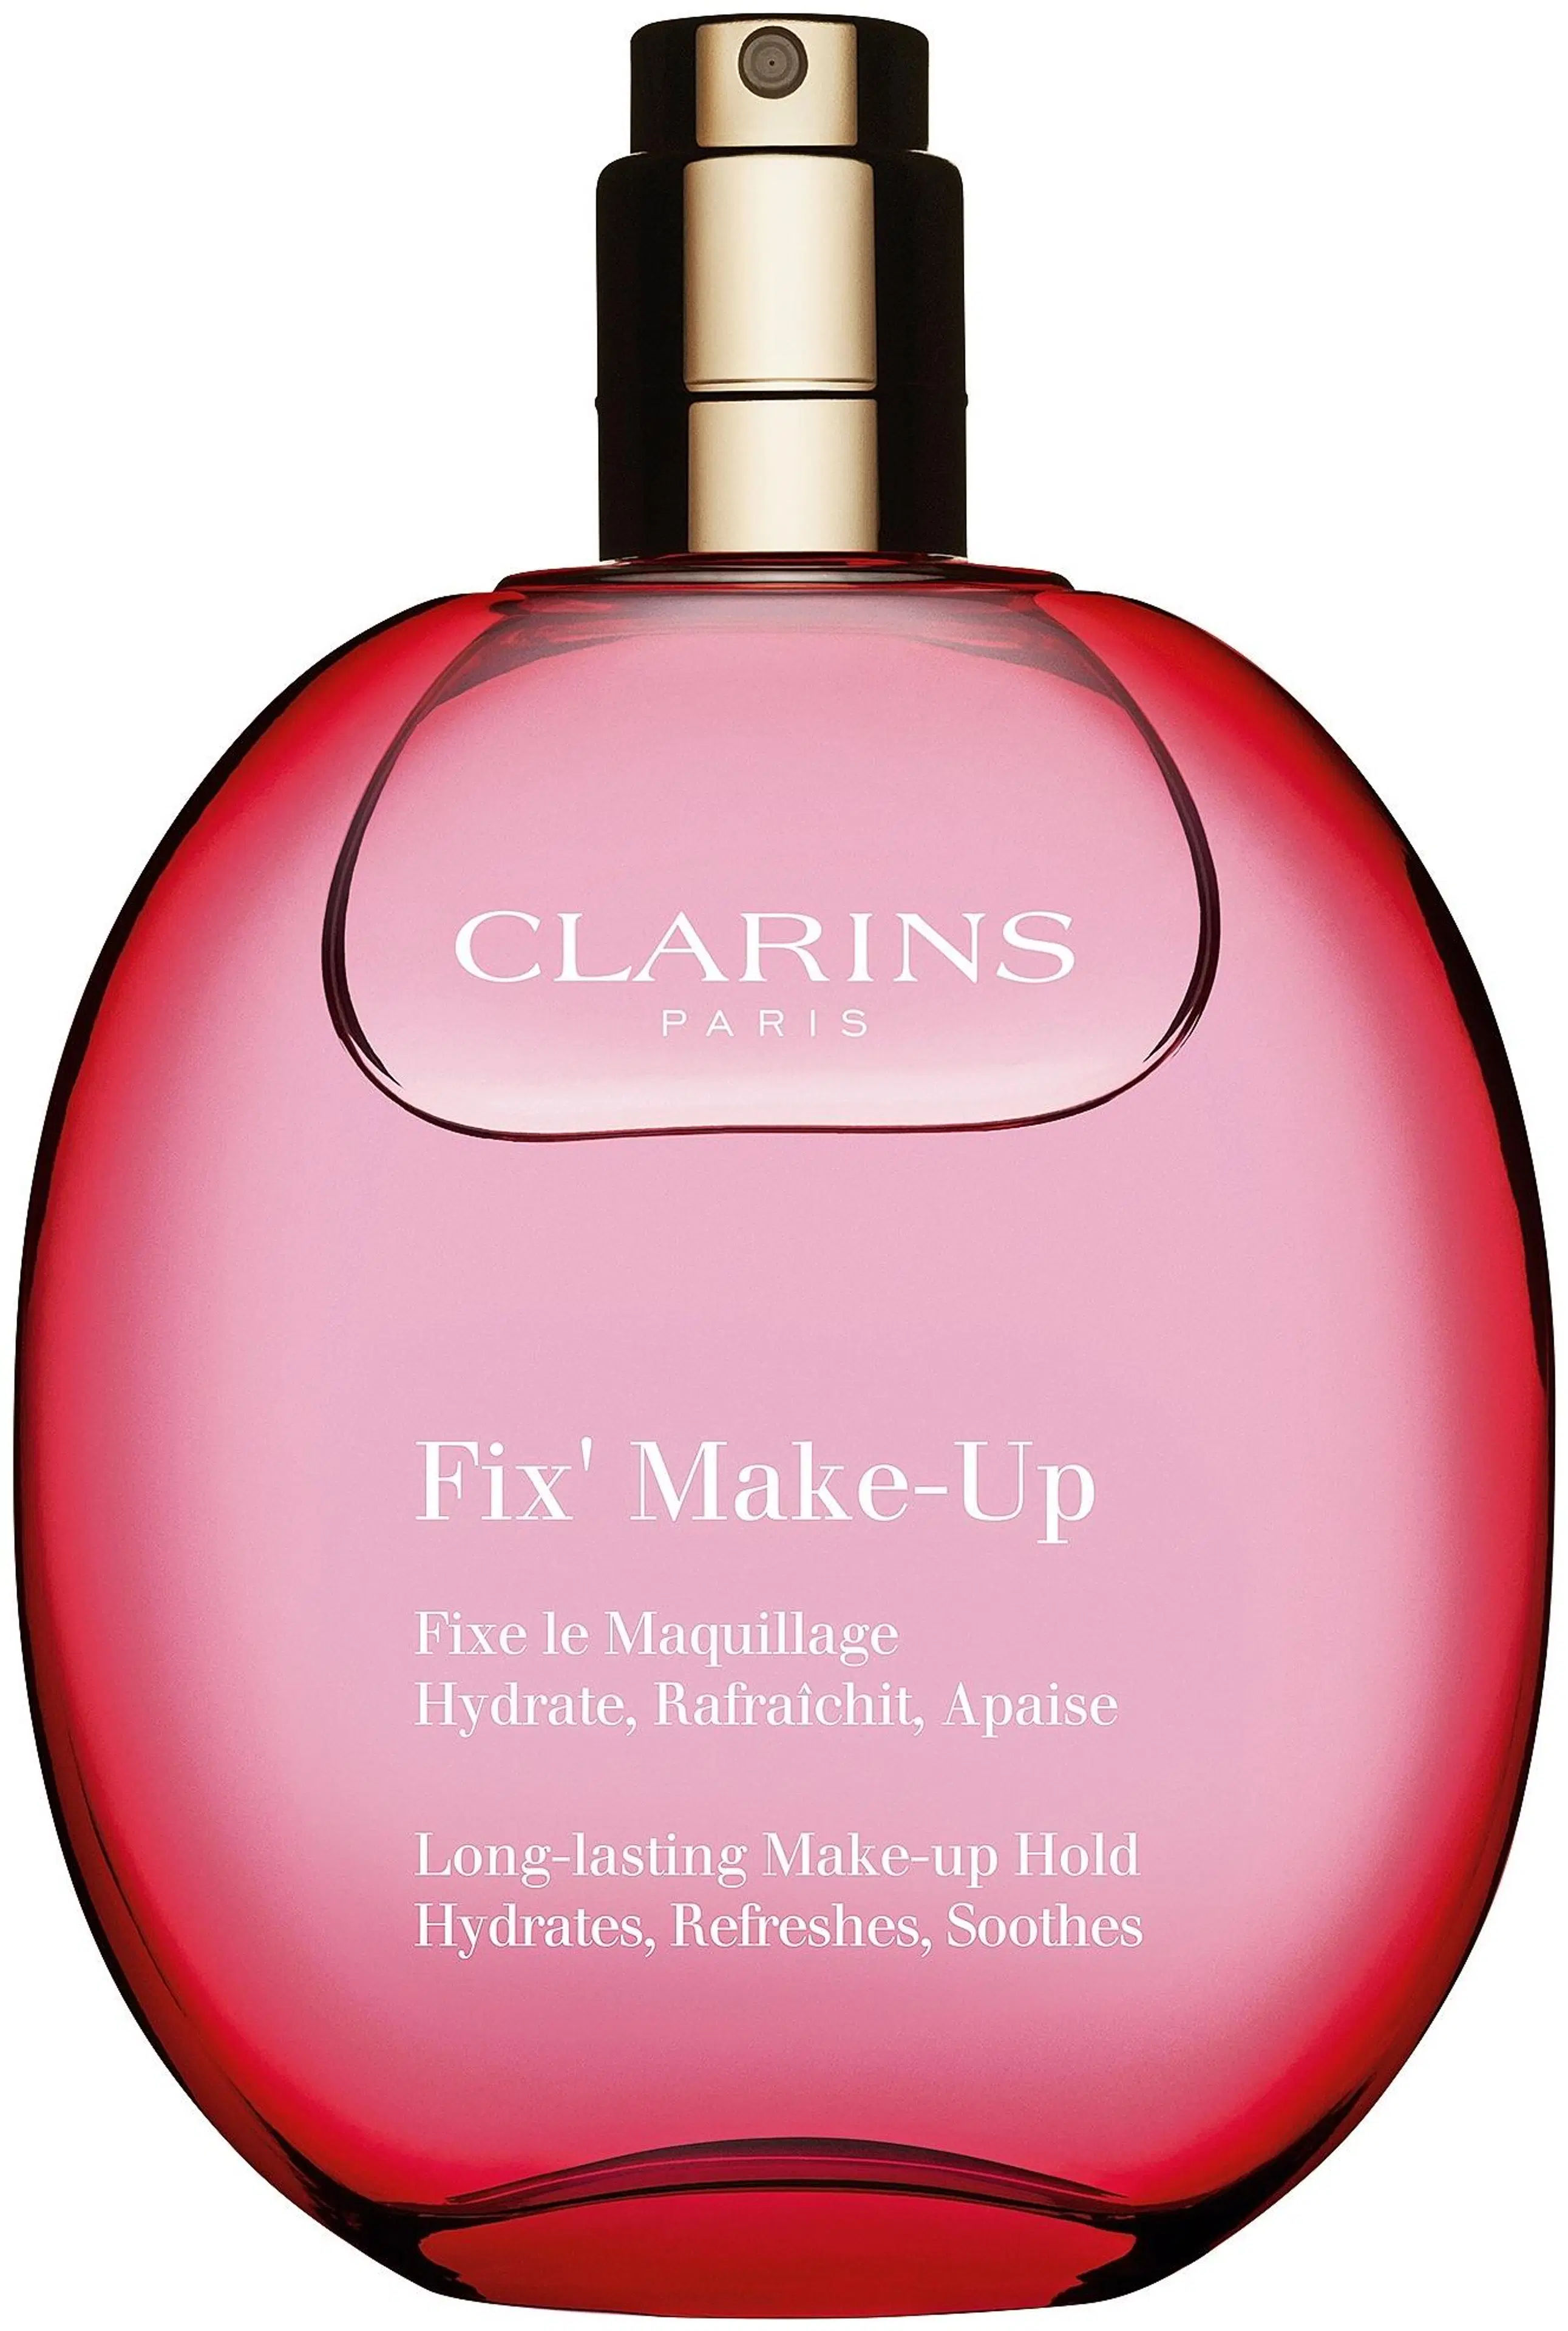 Clarins Fix Make-up meikinkiinnityssuihke 50 ml